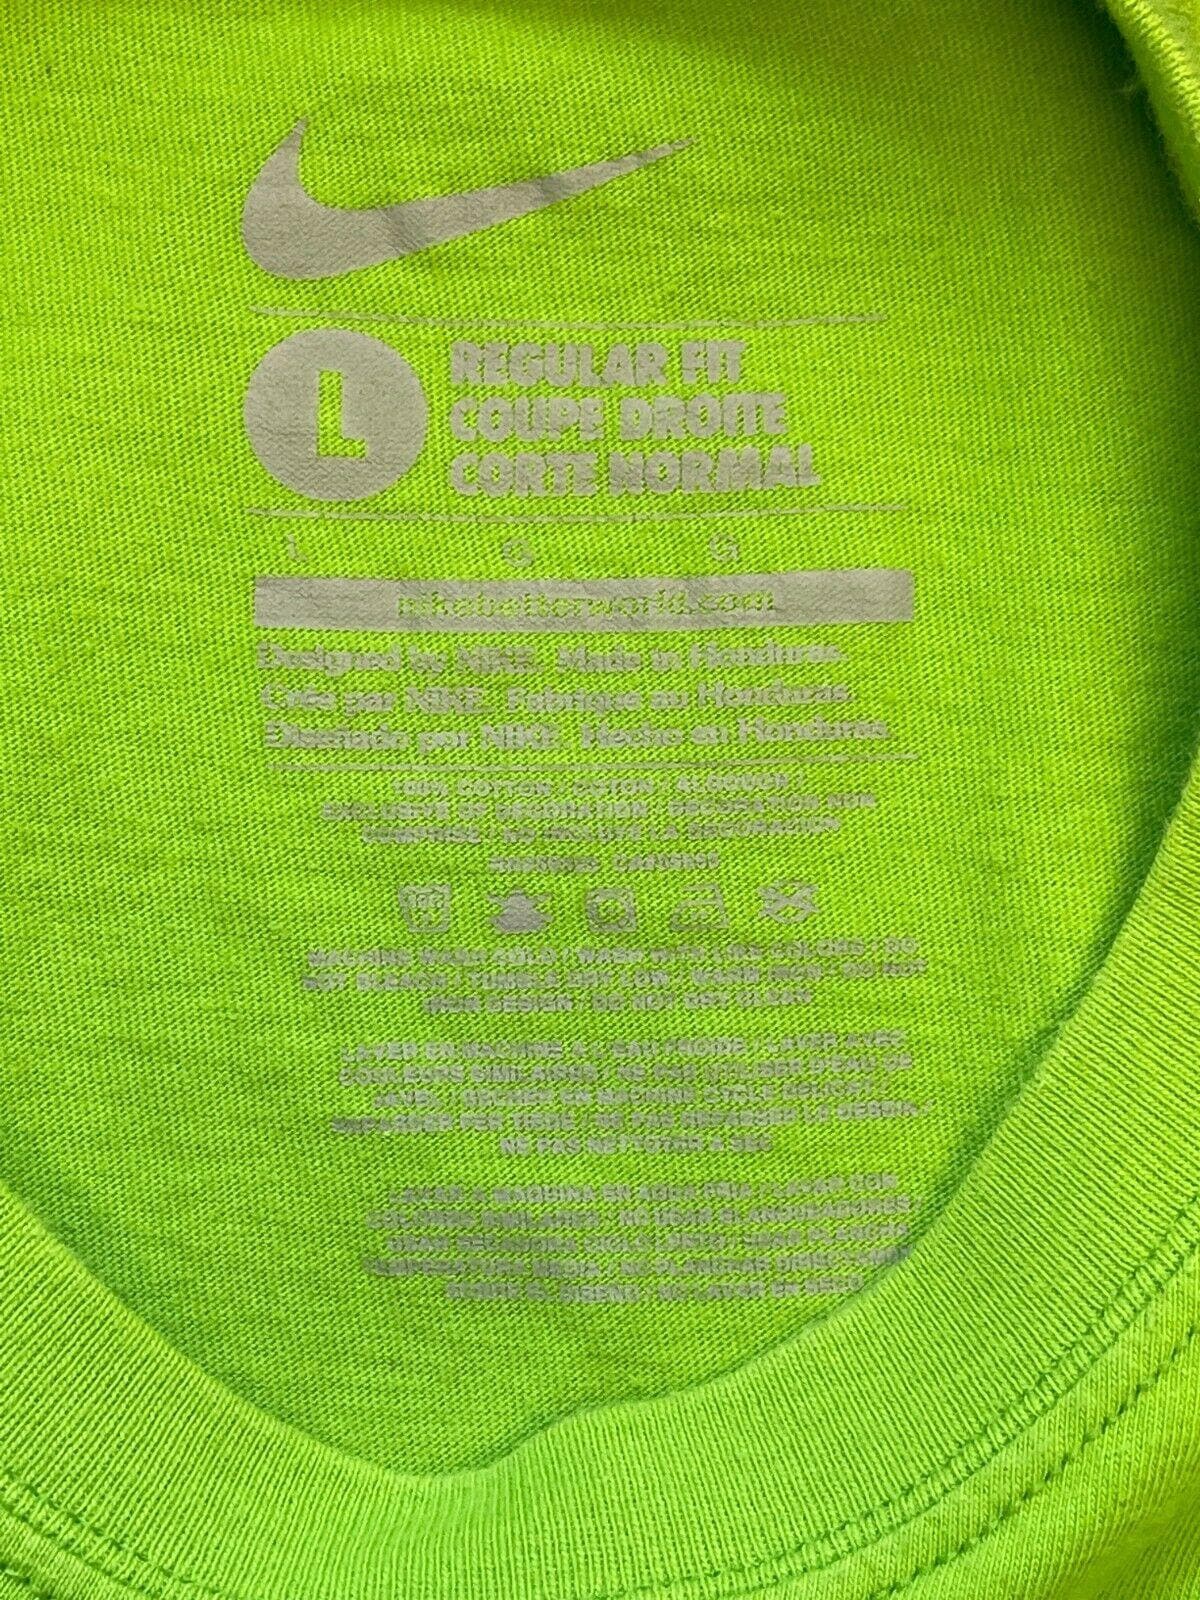 NFL Seattle Seahawks Green T-Shirt Men's Large